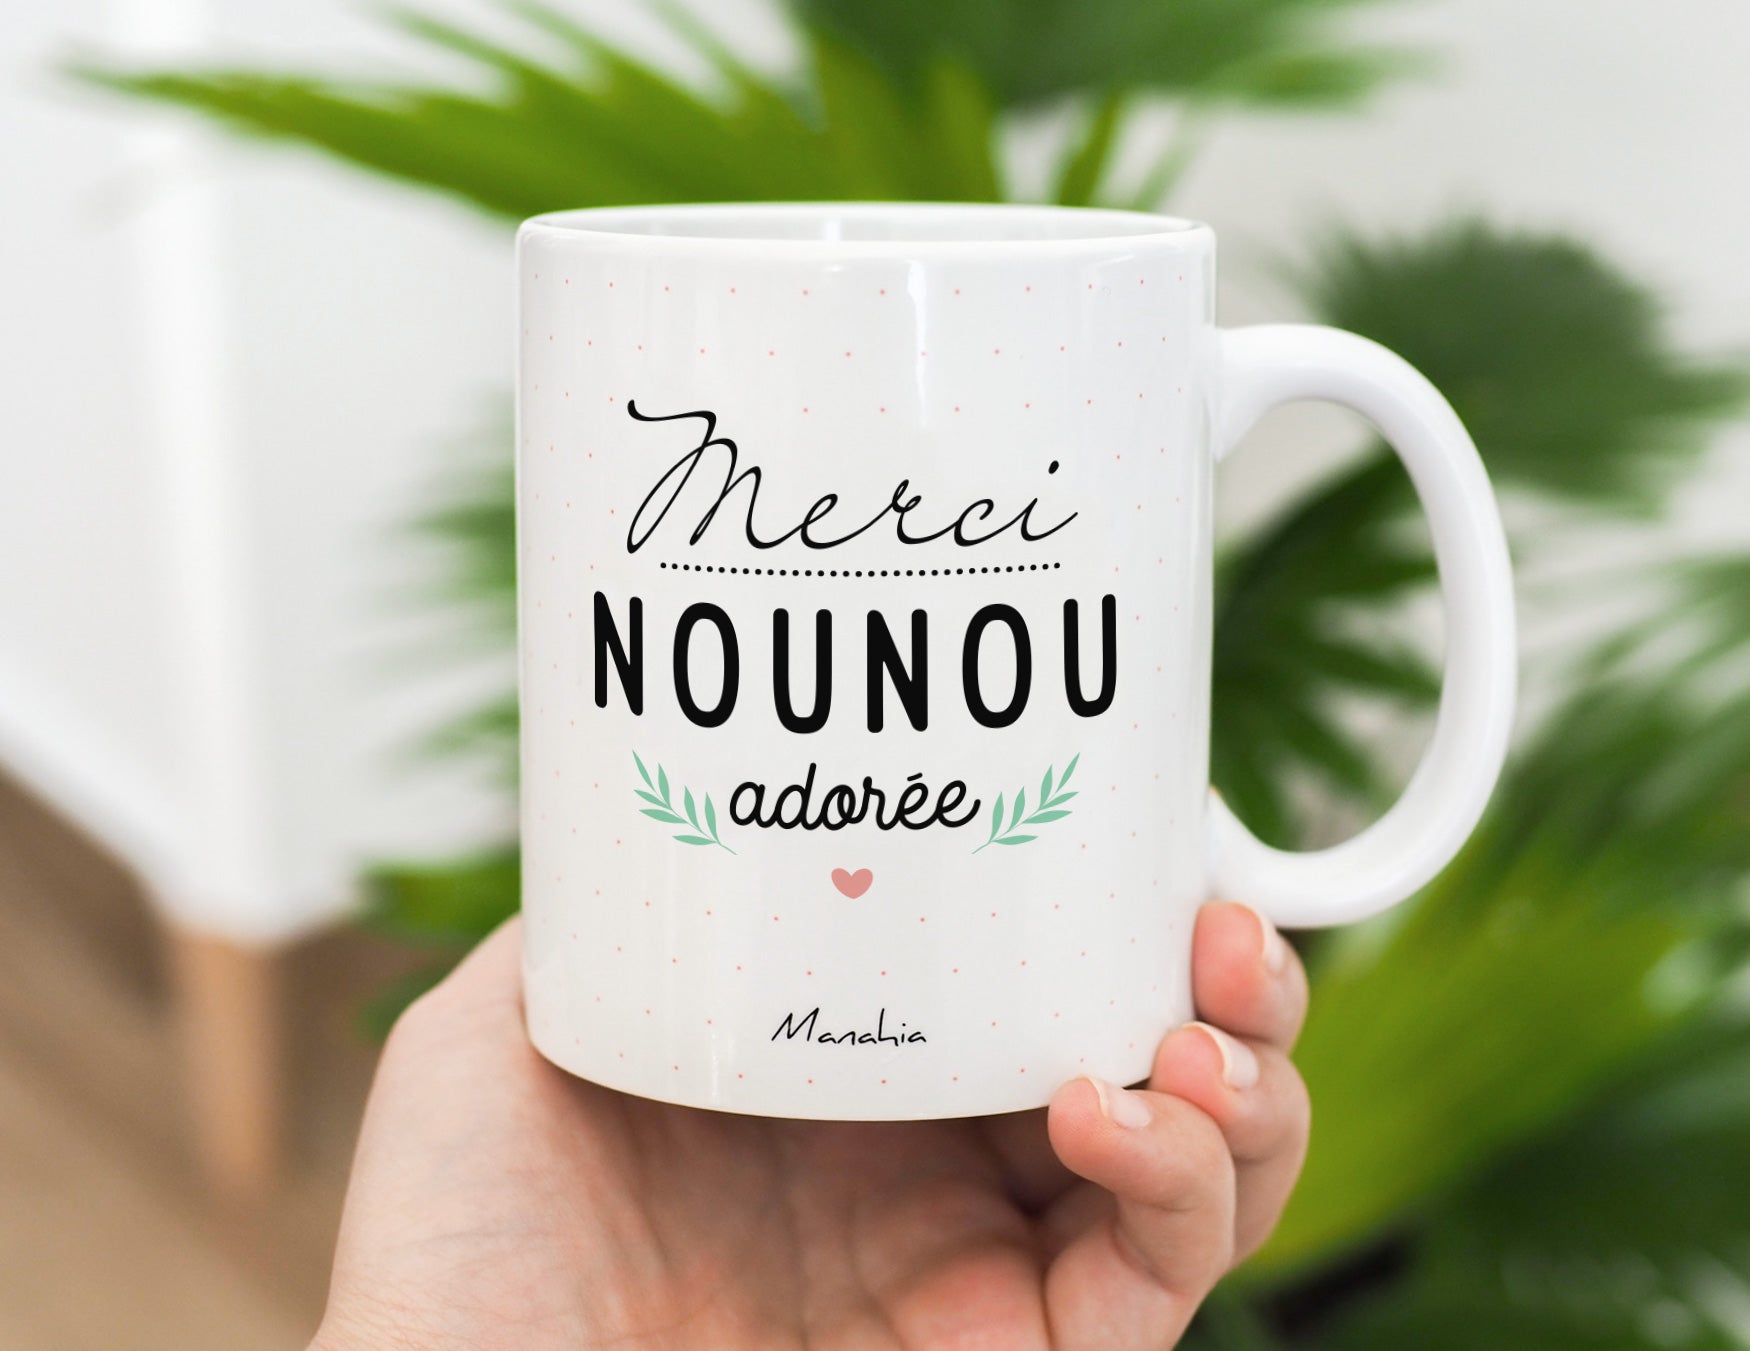 Mug merci nounou adorée, mug personnalisé imprimé en France – Manahia